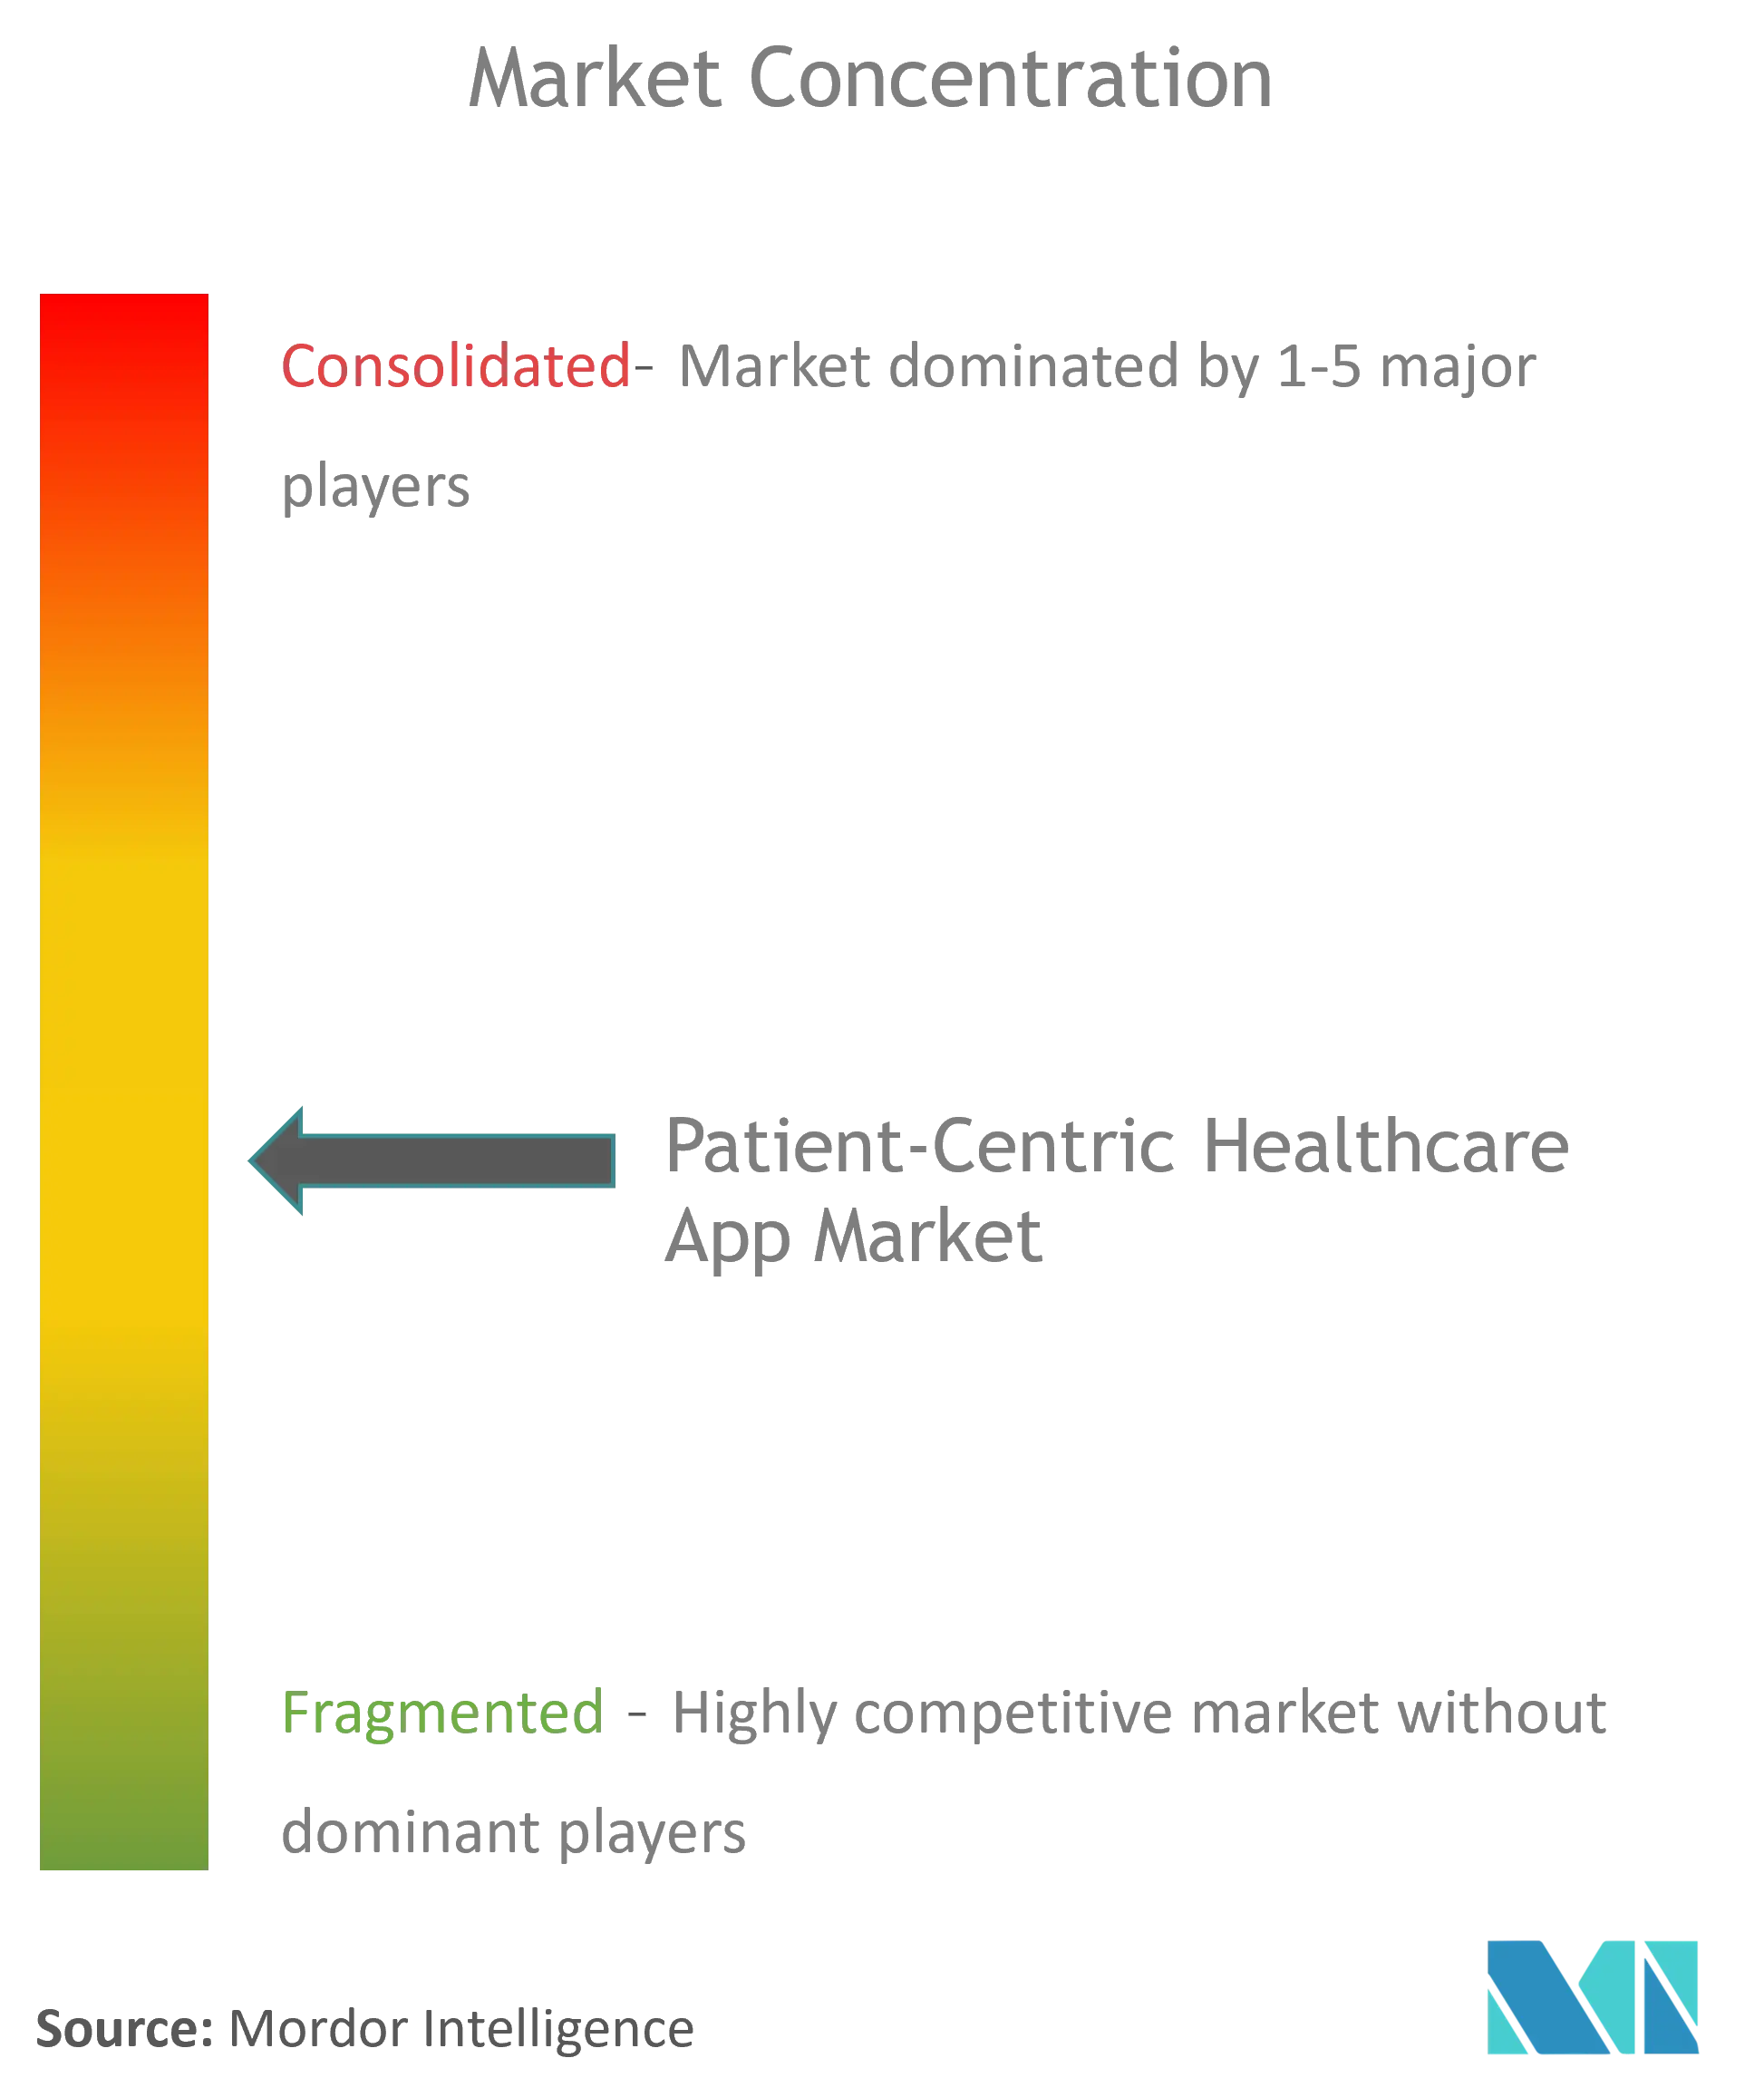 Global Patient-centric Health Care App Market Concentration